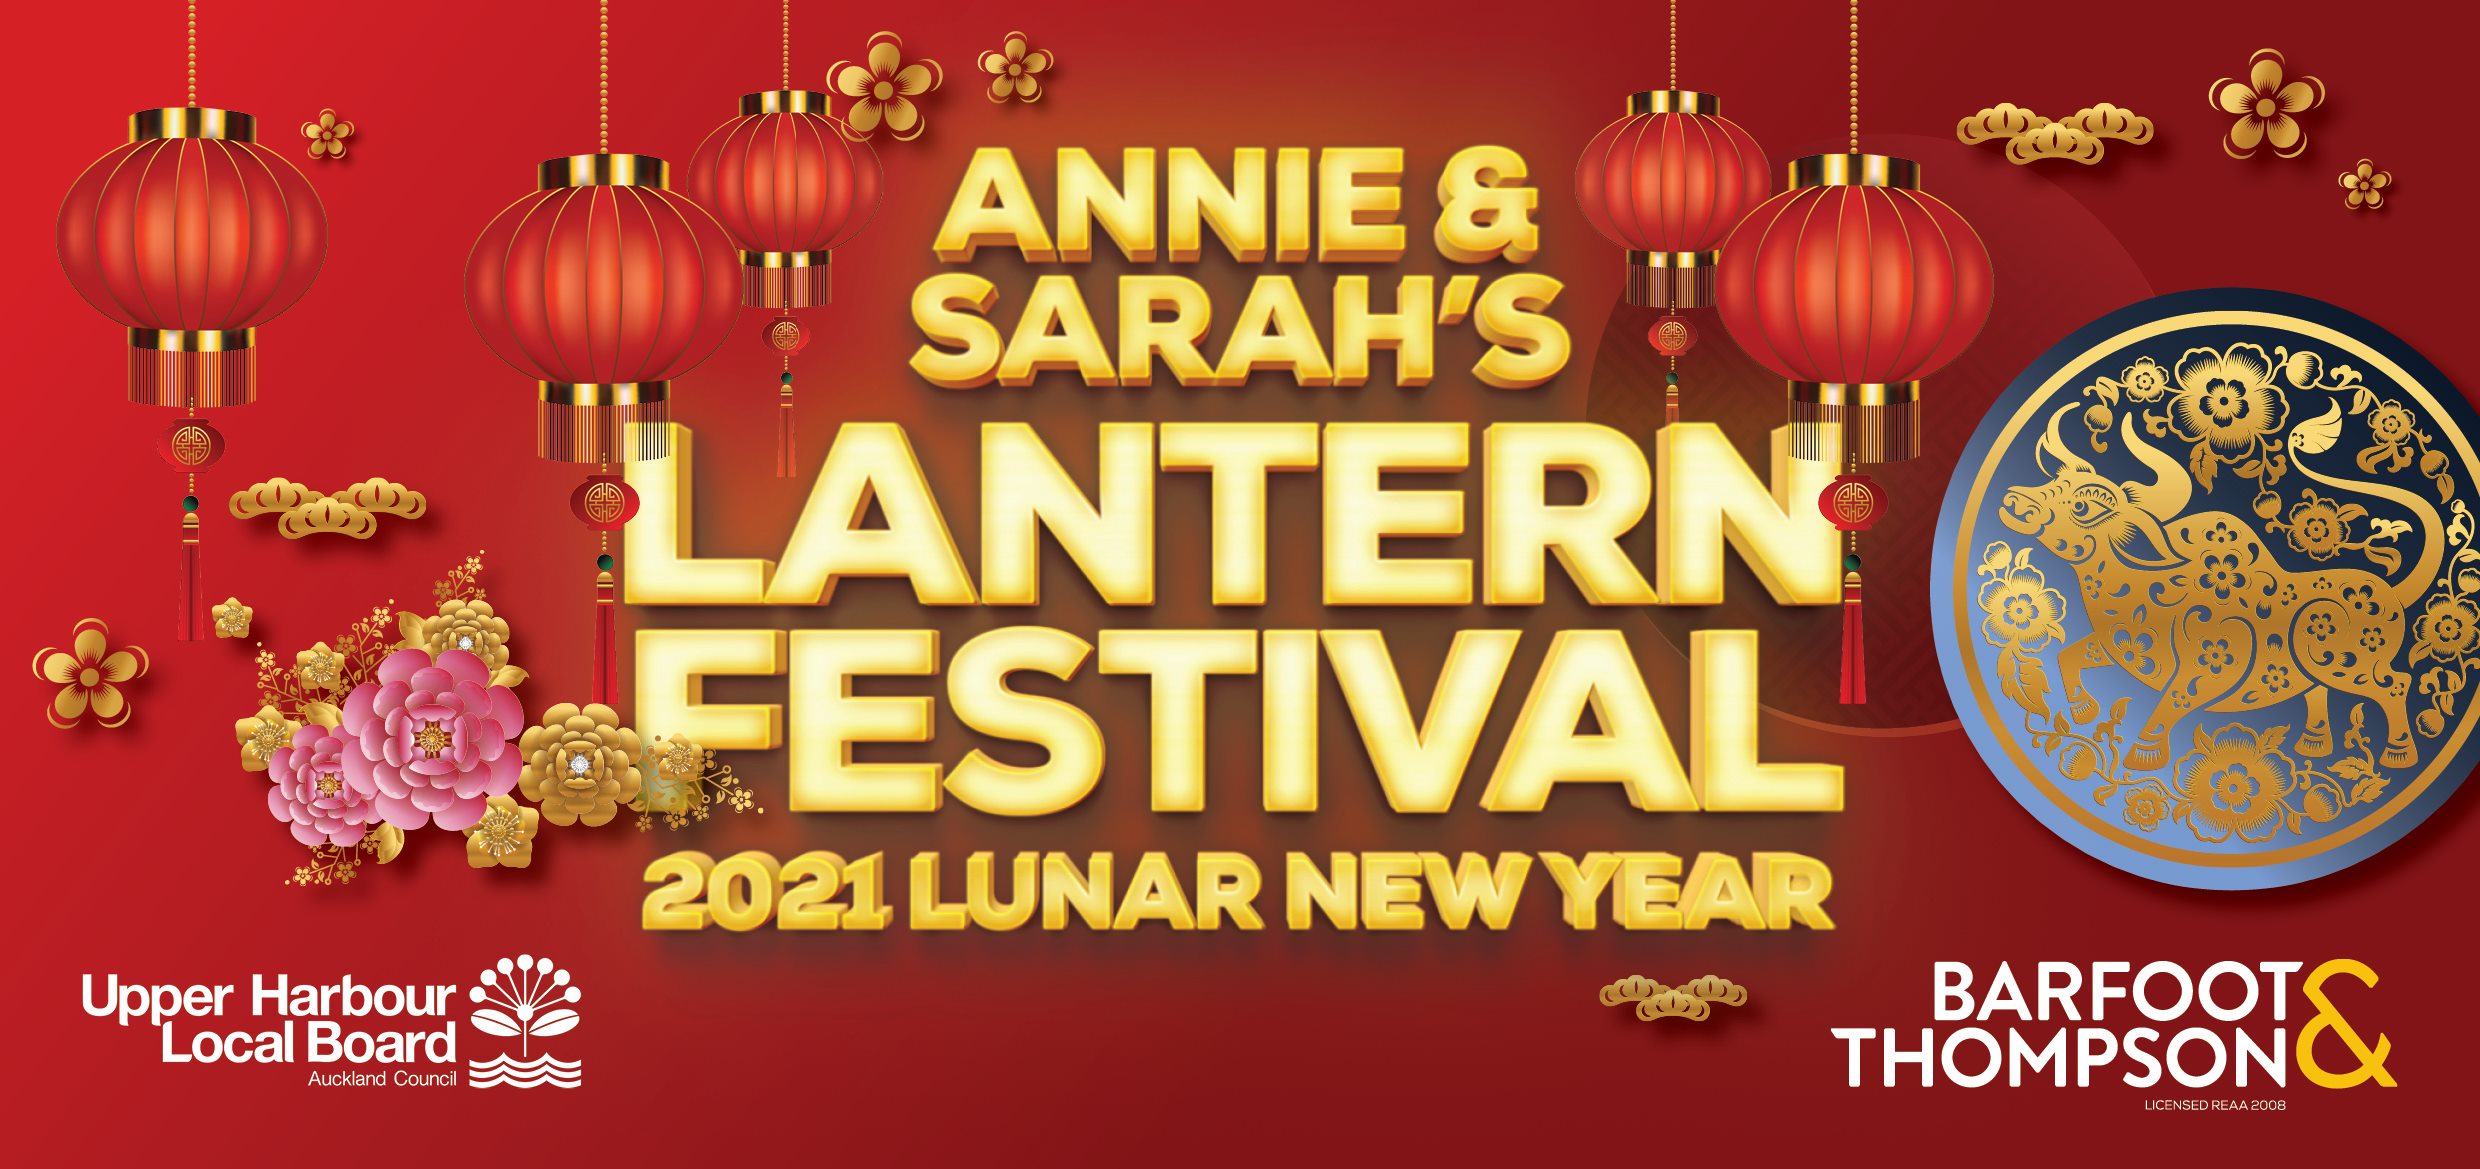 reno lantern festival 2021